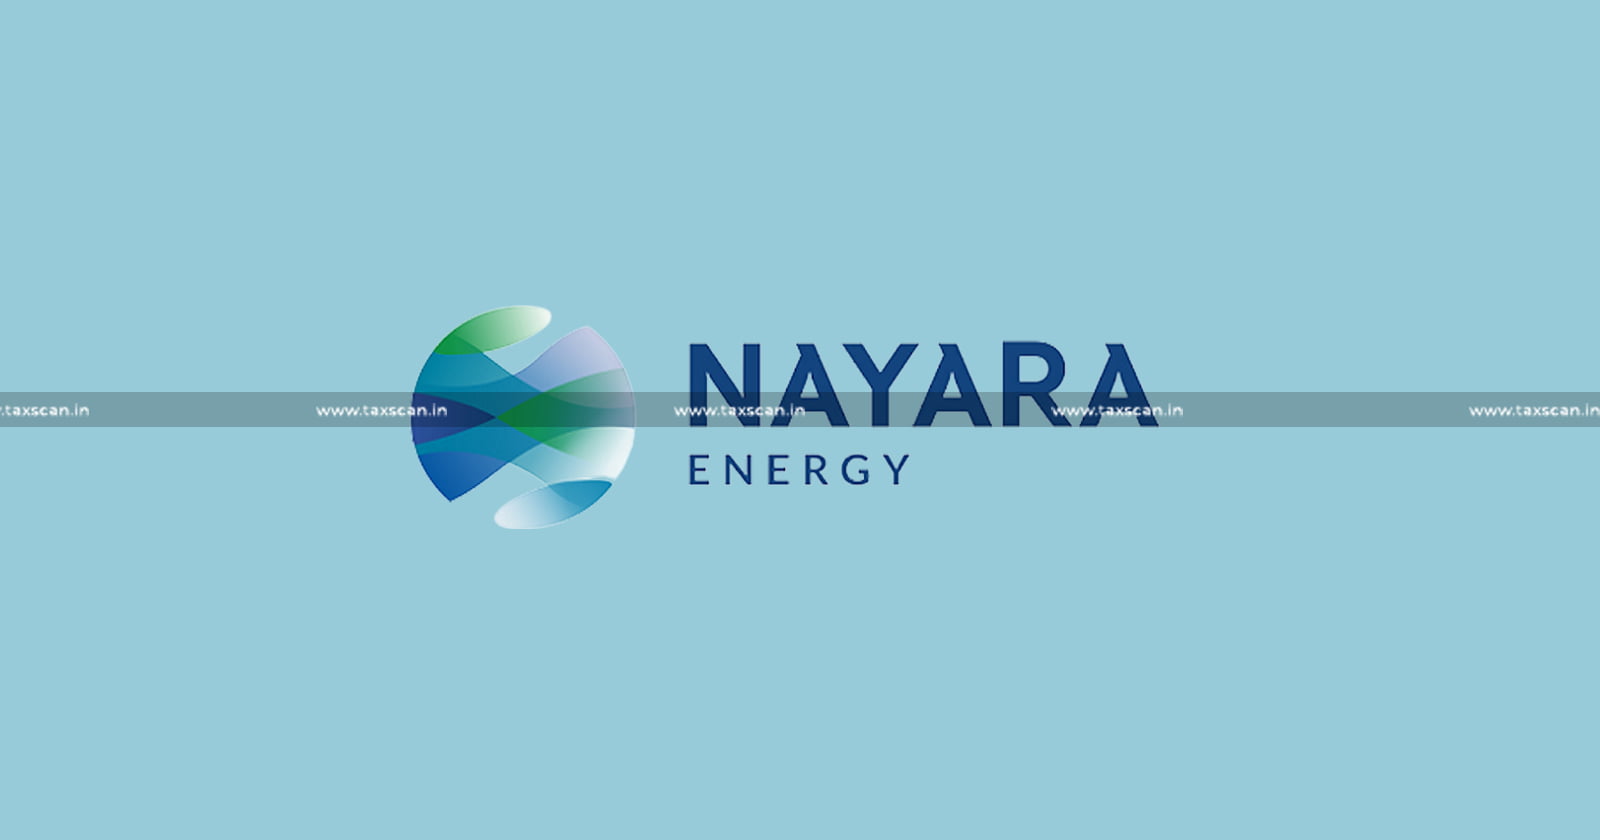 WhatsApp number of Nayara Energy | Local Business